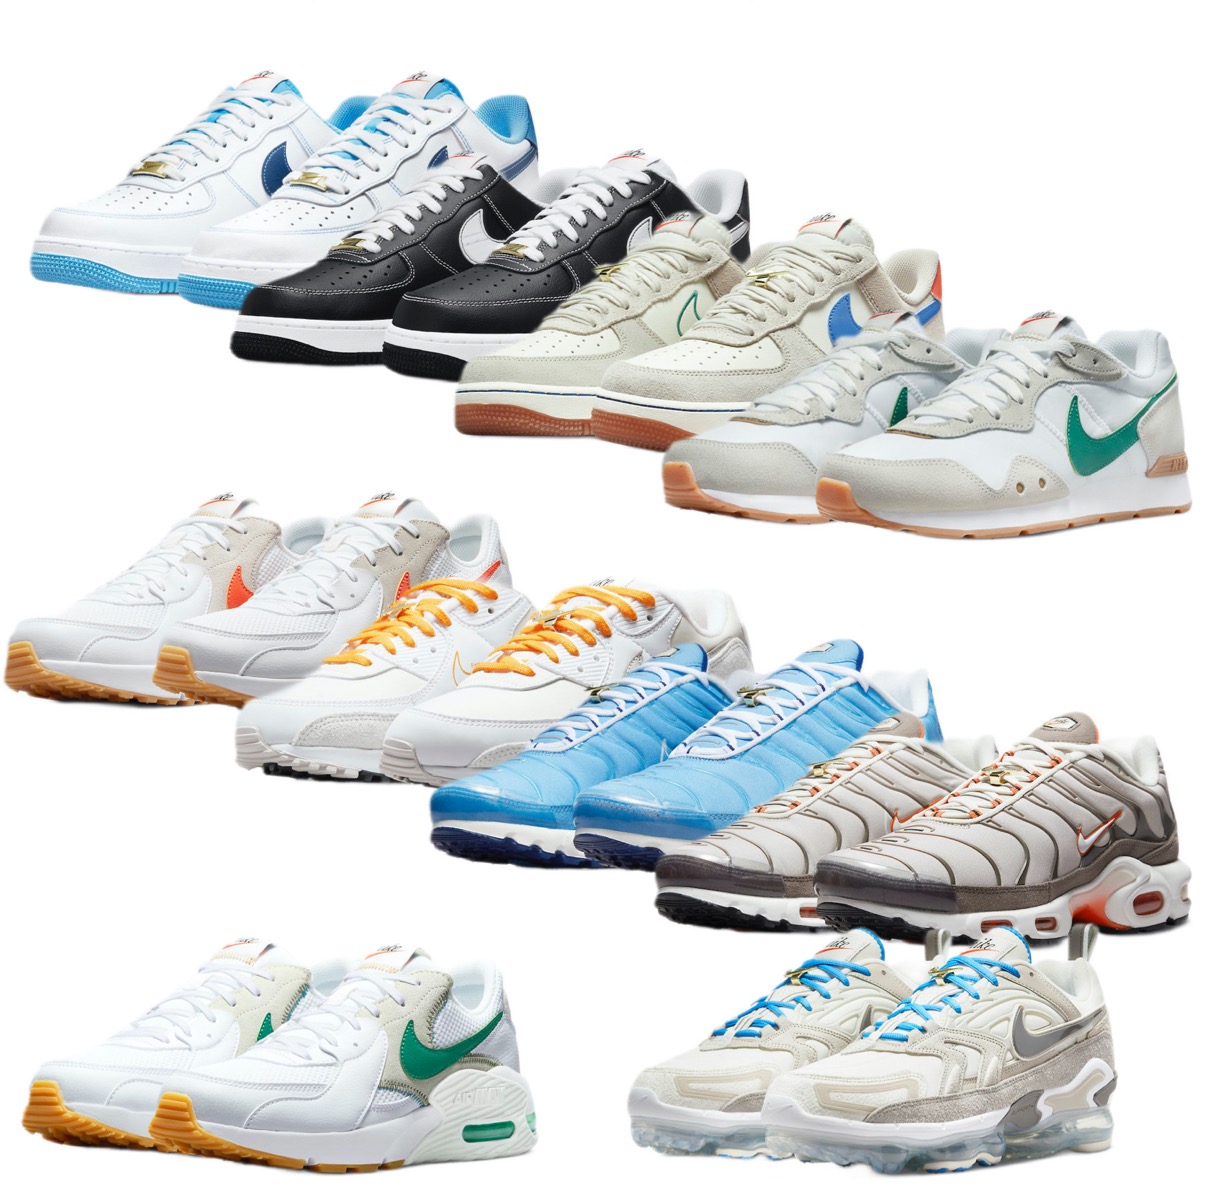 Nike】スウッシュロゴ生誕50周年を記念した“First Use” Collectionが 